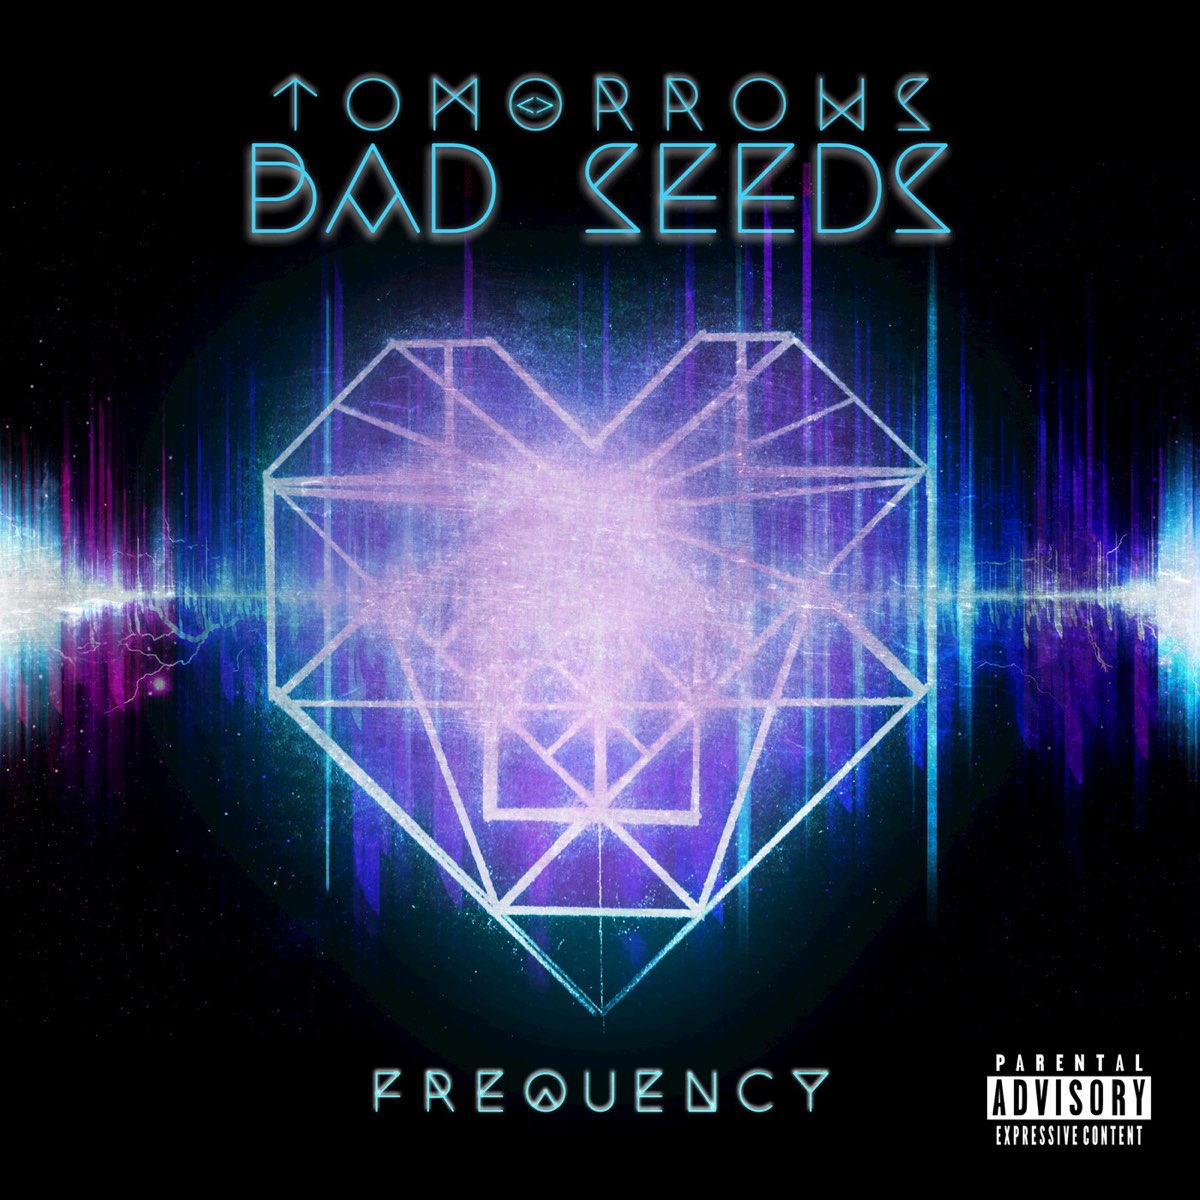 Frequency песня. Tomorrows Bad Seeds. Frequencies песня. Bad Seeds Графика.